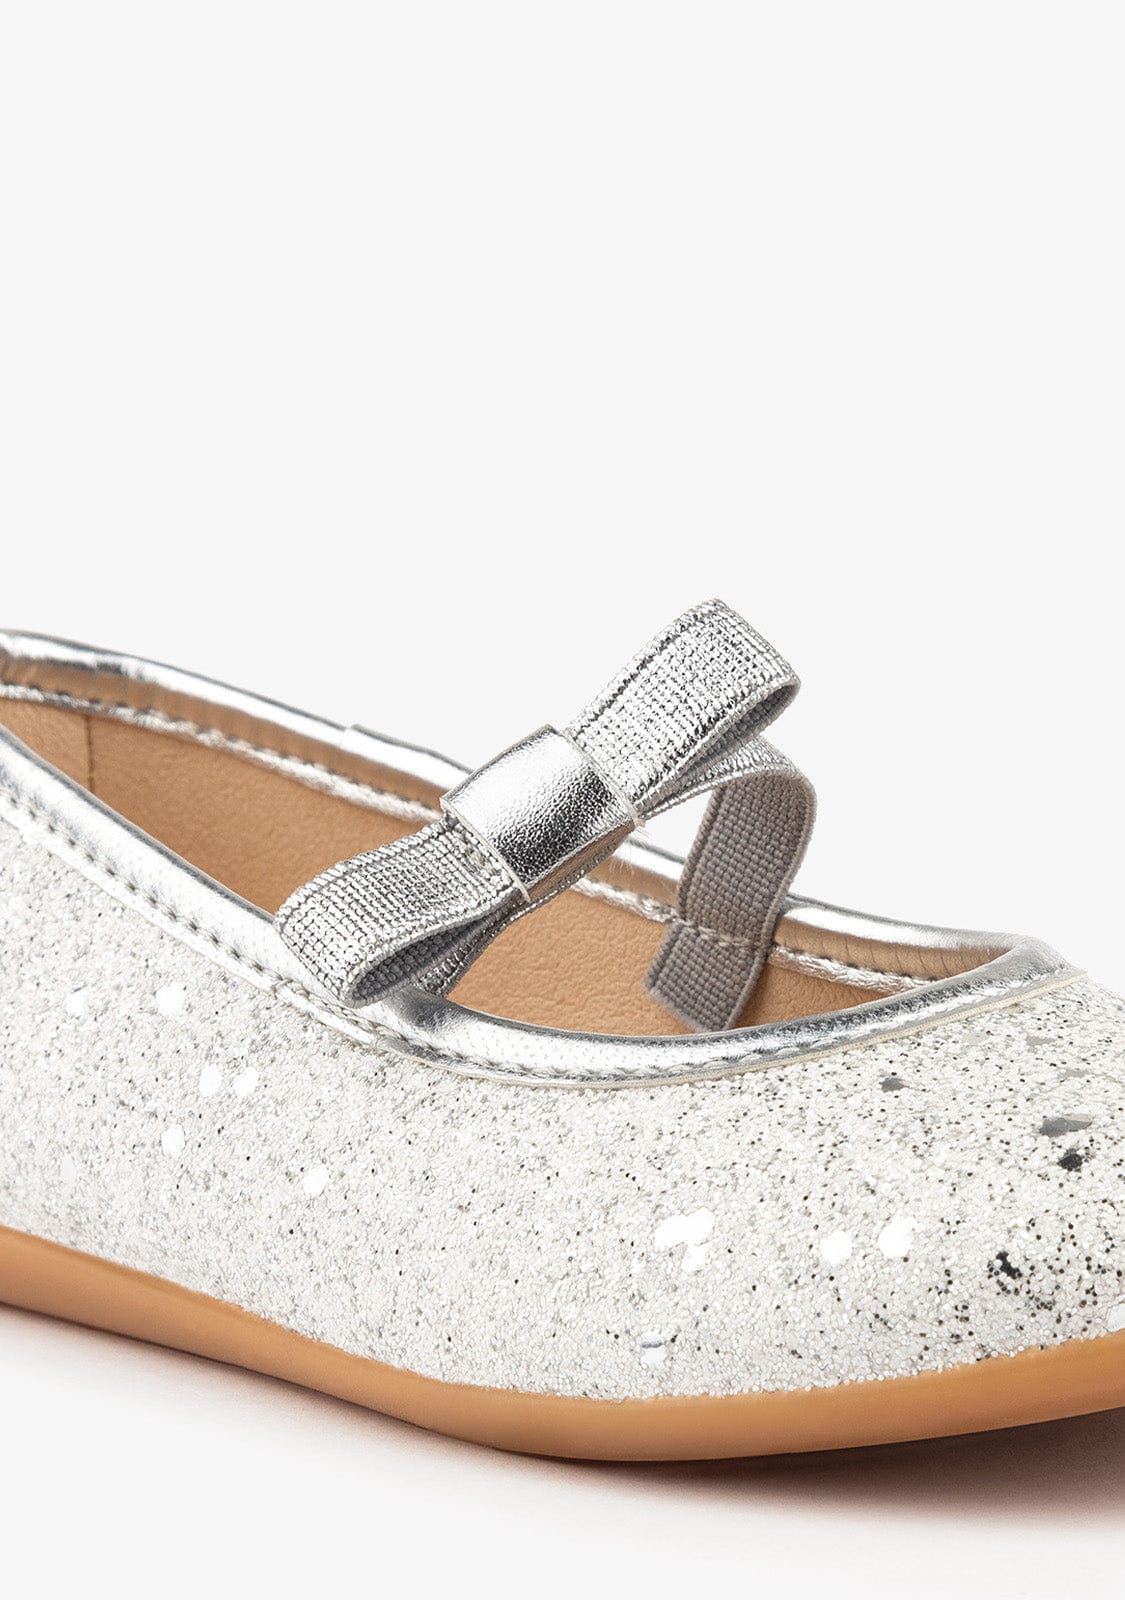 CONGUITOS Shoes Girl's Glitter Silver Ballerinas With Bow